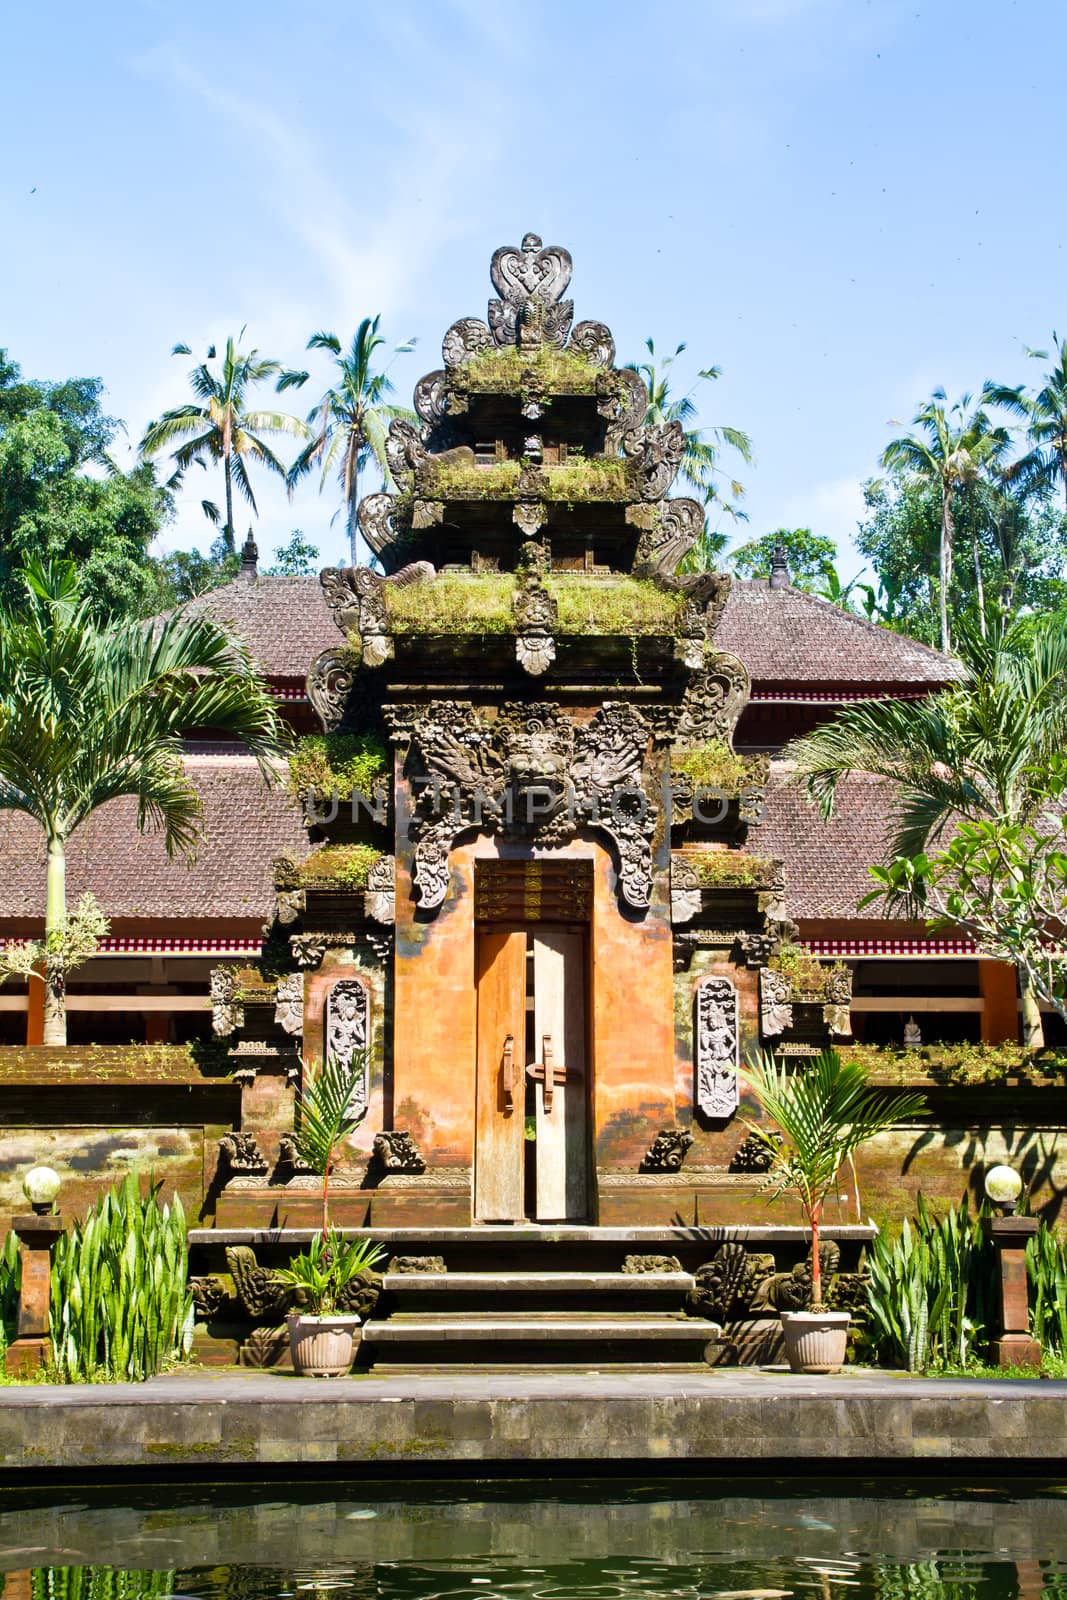 Gate of Pura Tirta Empul Temple, Hindu temple in Bali